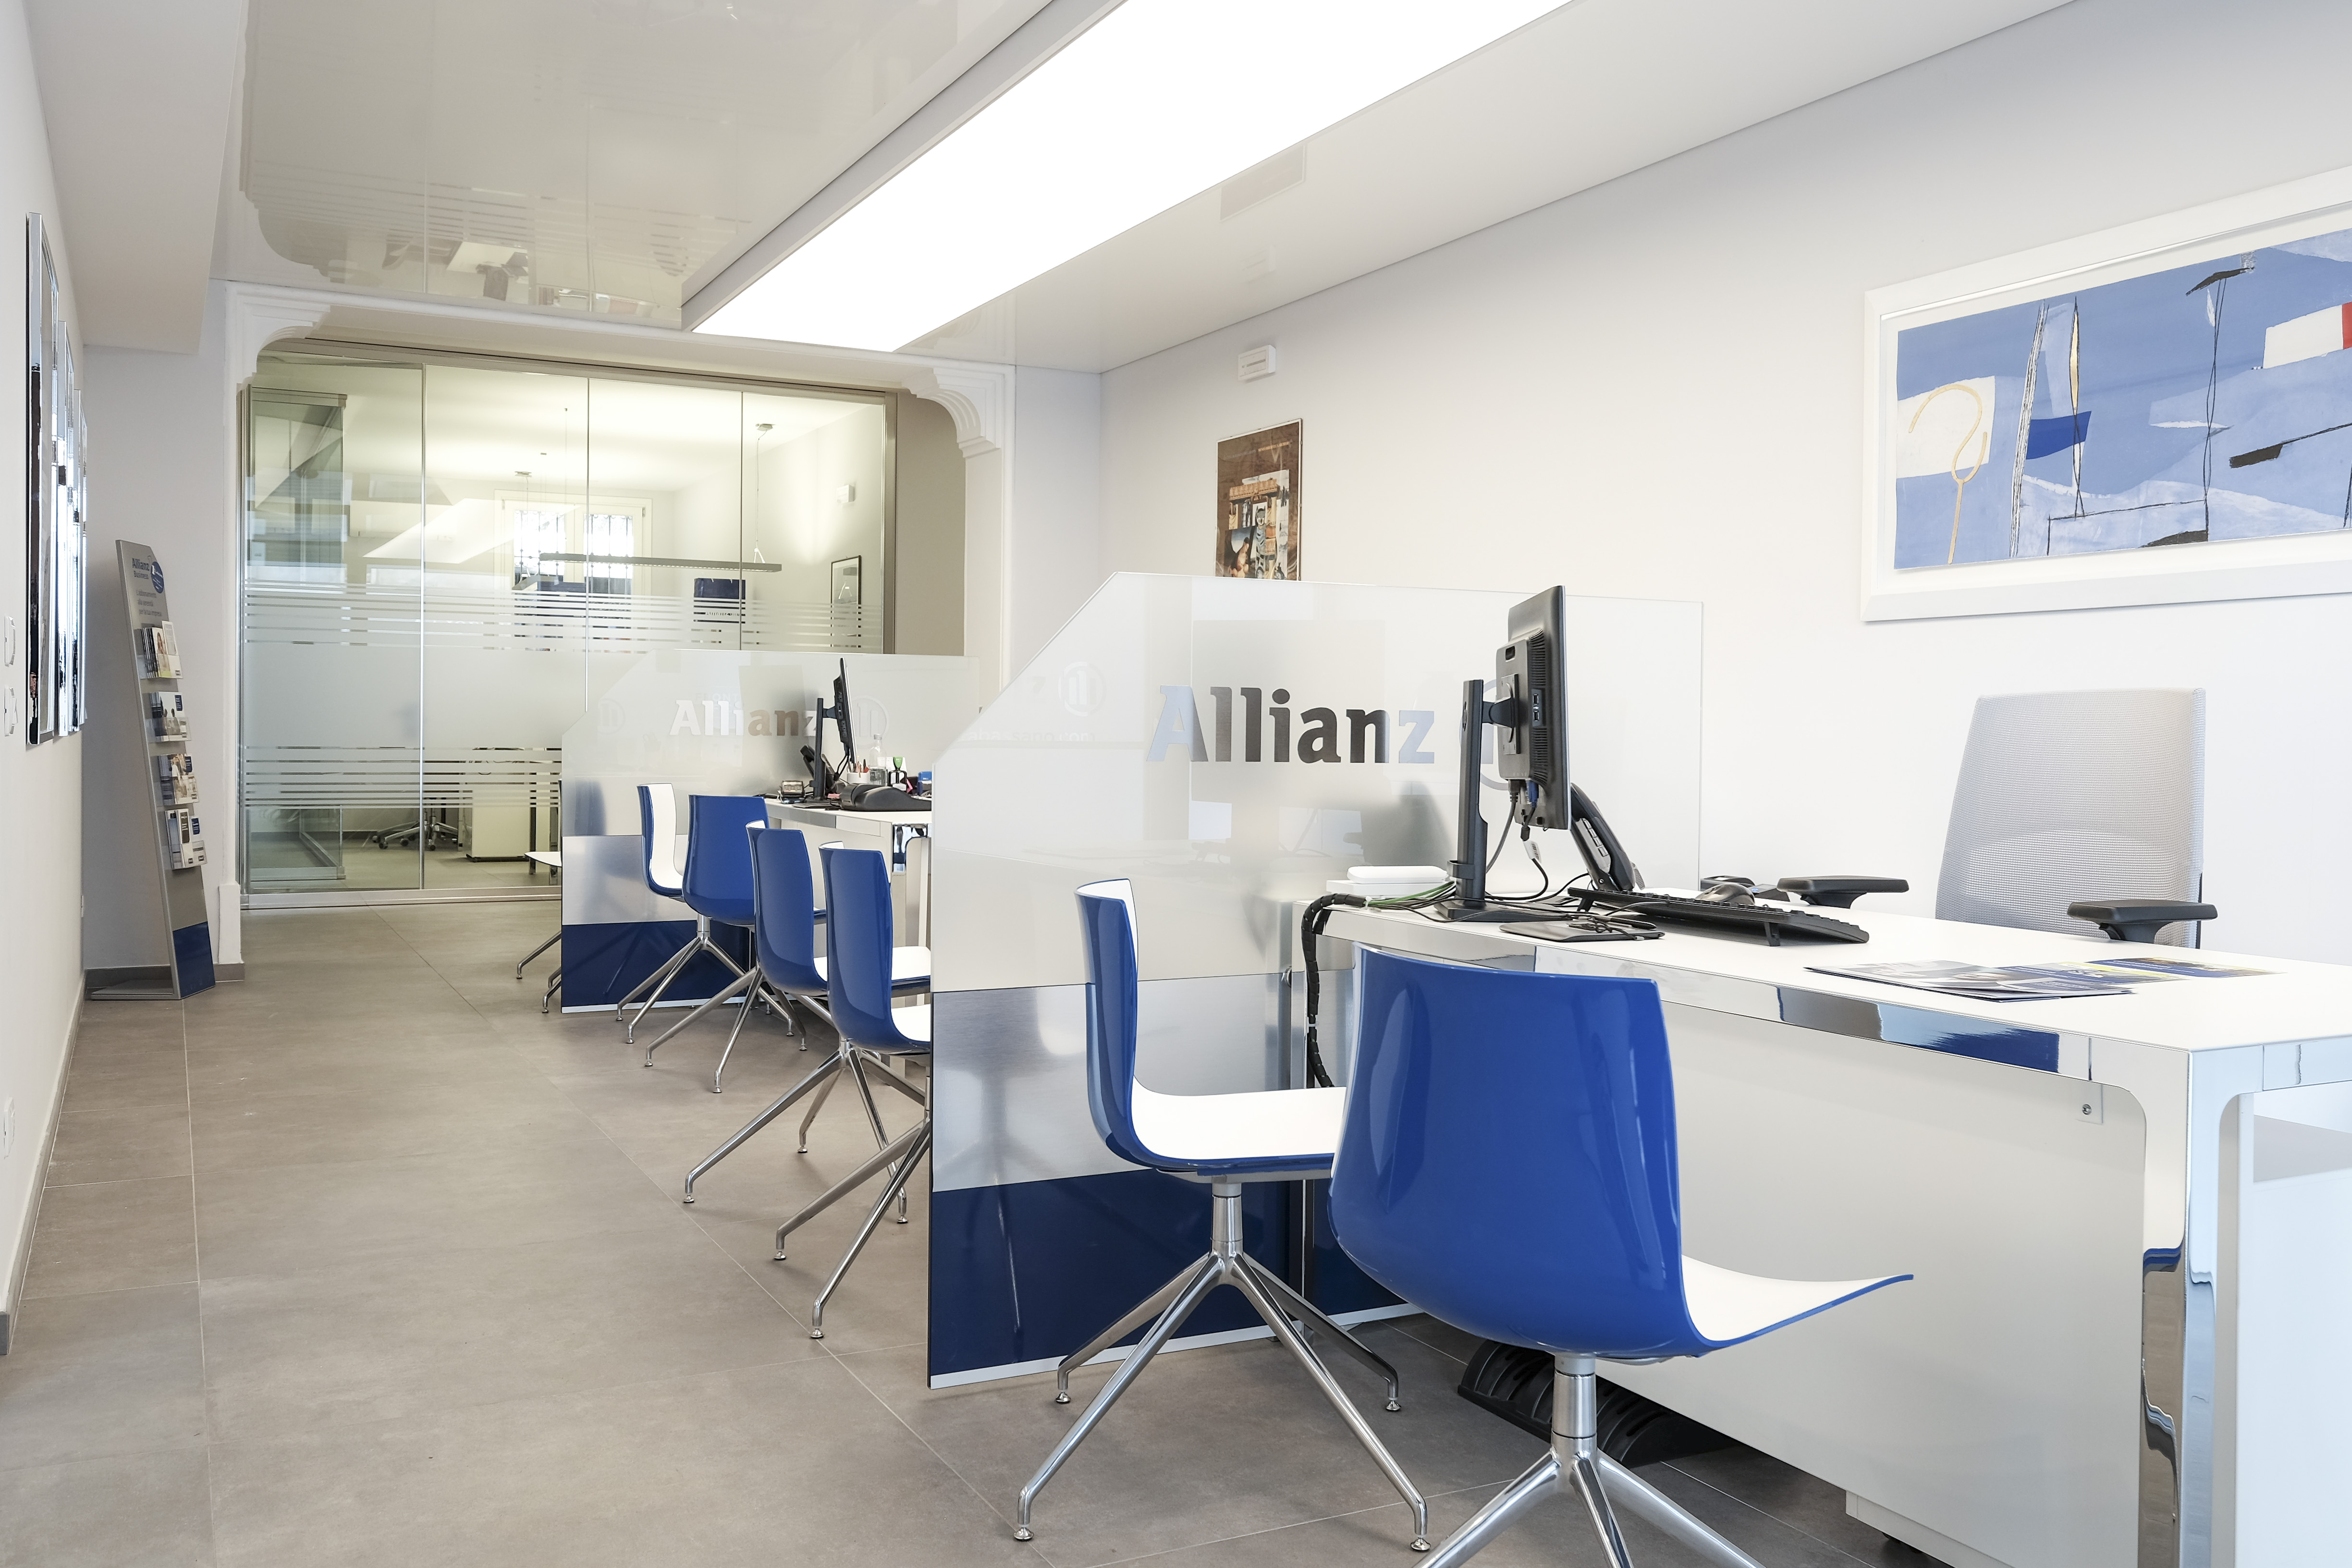 ALLIANZ BANK, Bassano Del Grappa, Italy (2021)